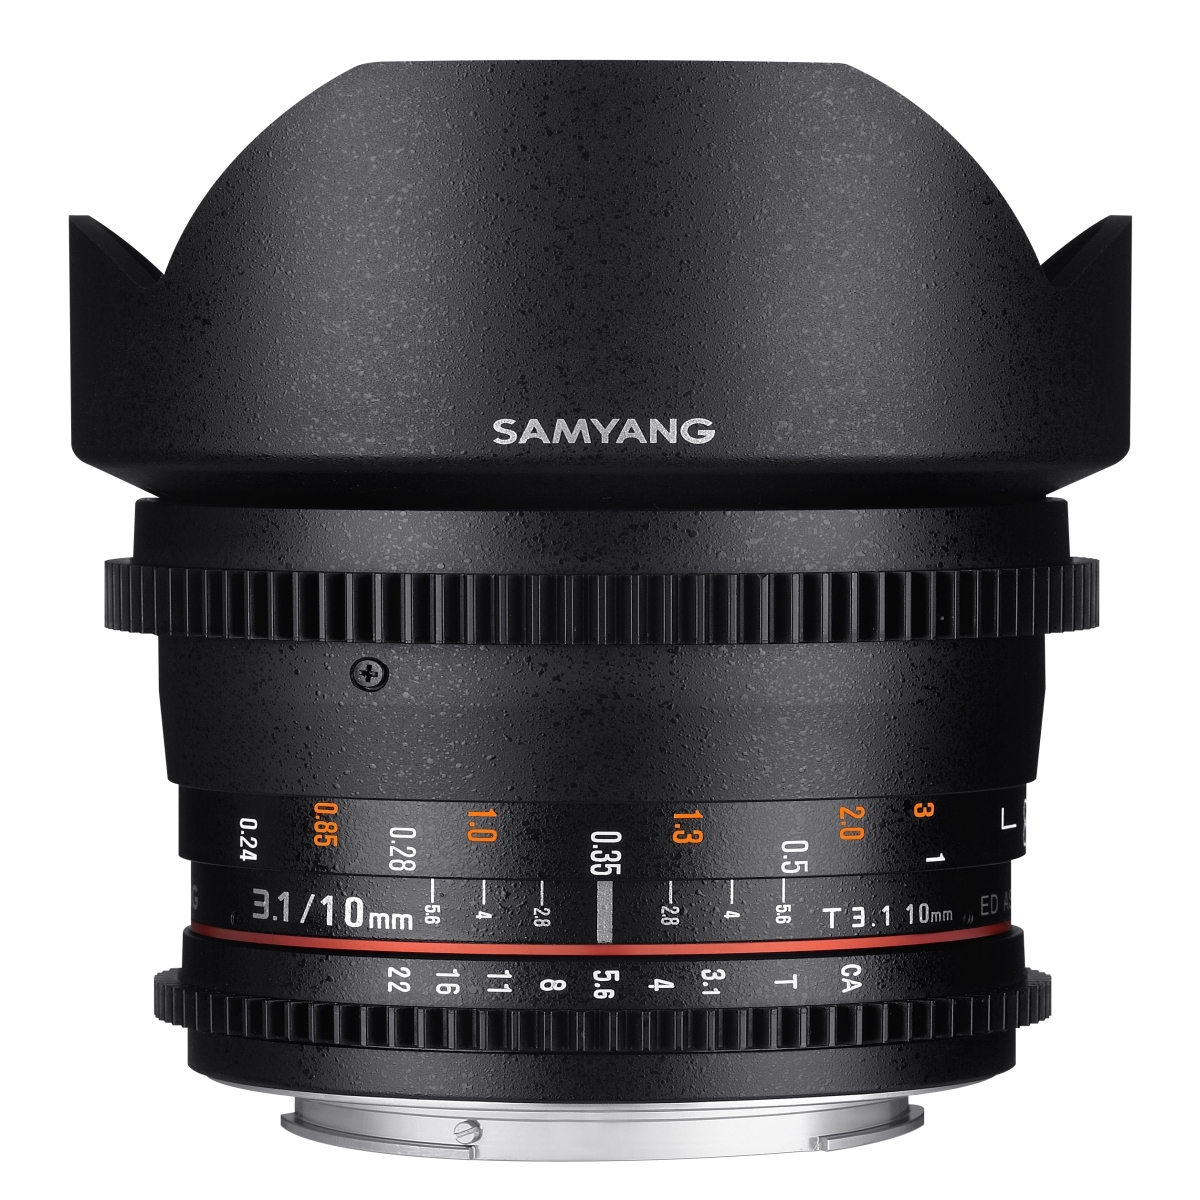 Samyang MF 10 mm 1:3,1 Video für Canon EF-M